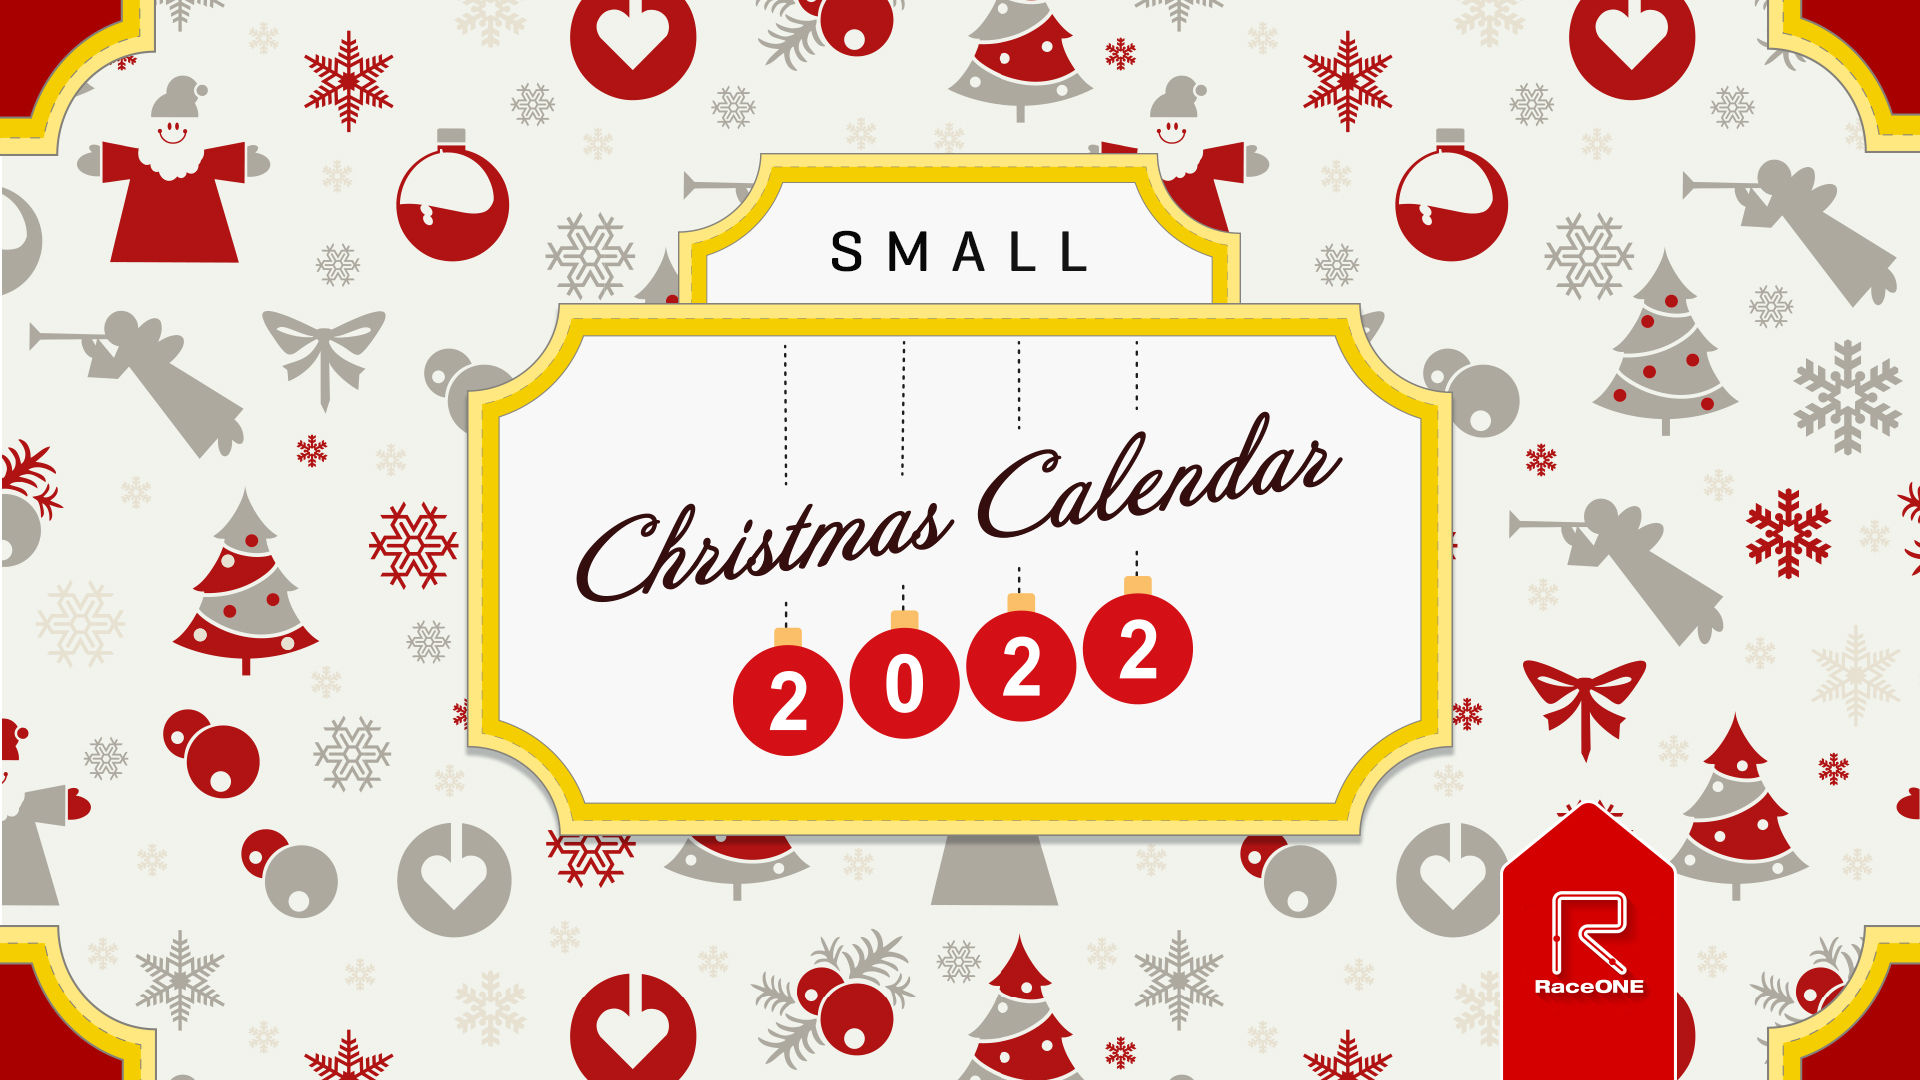 Christmas Calendar 2022 - Small #1